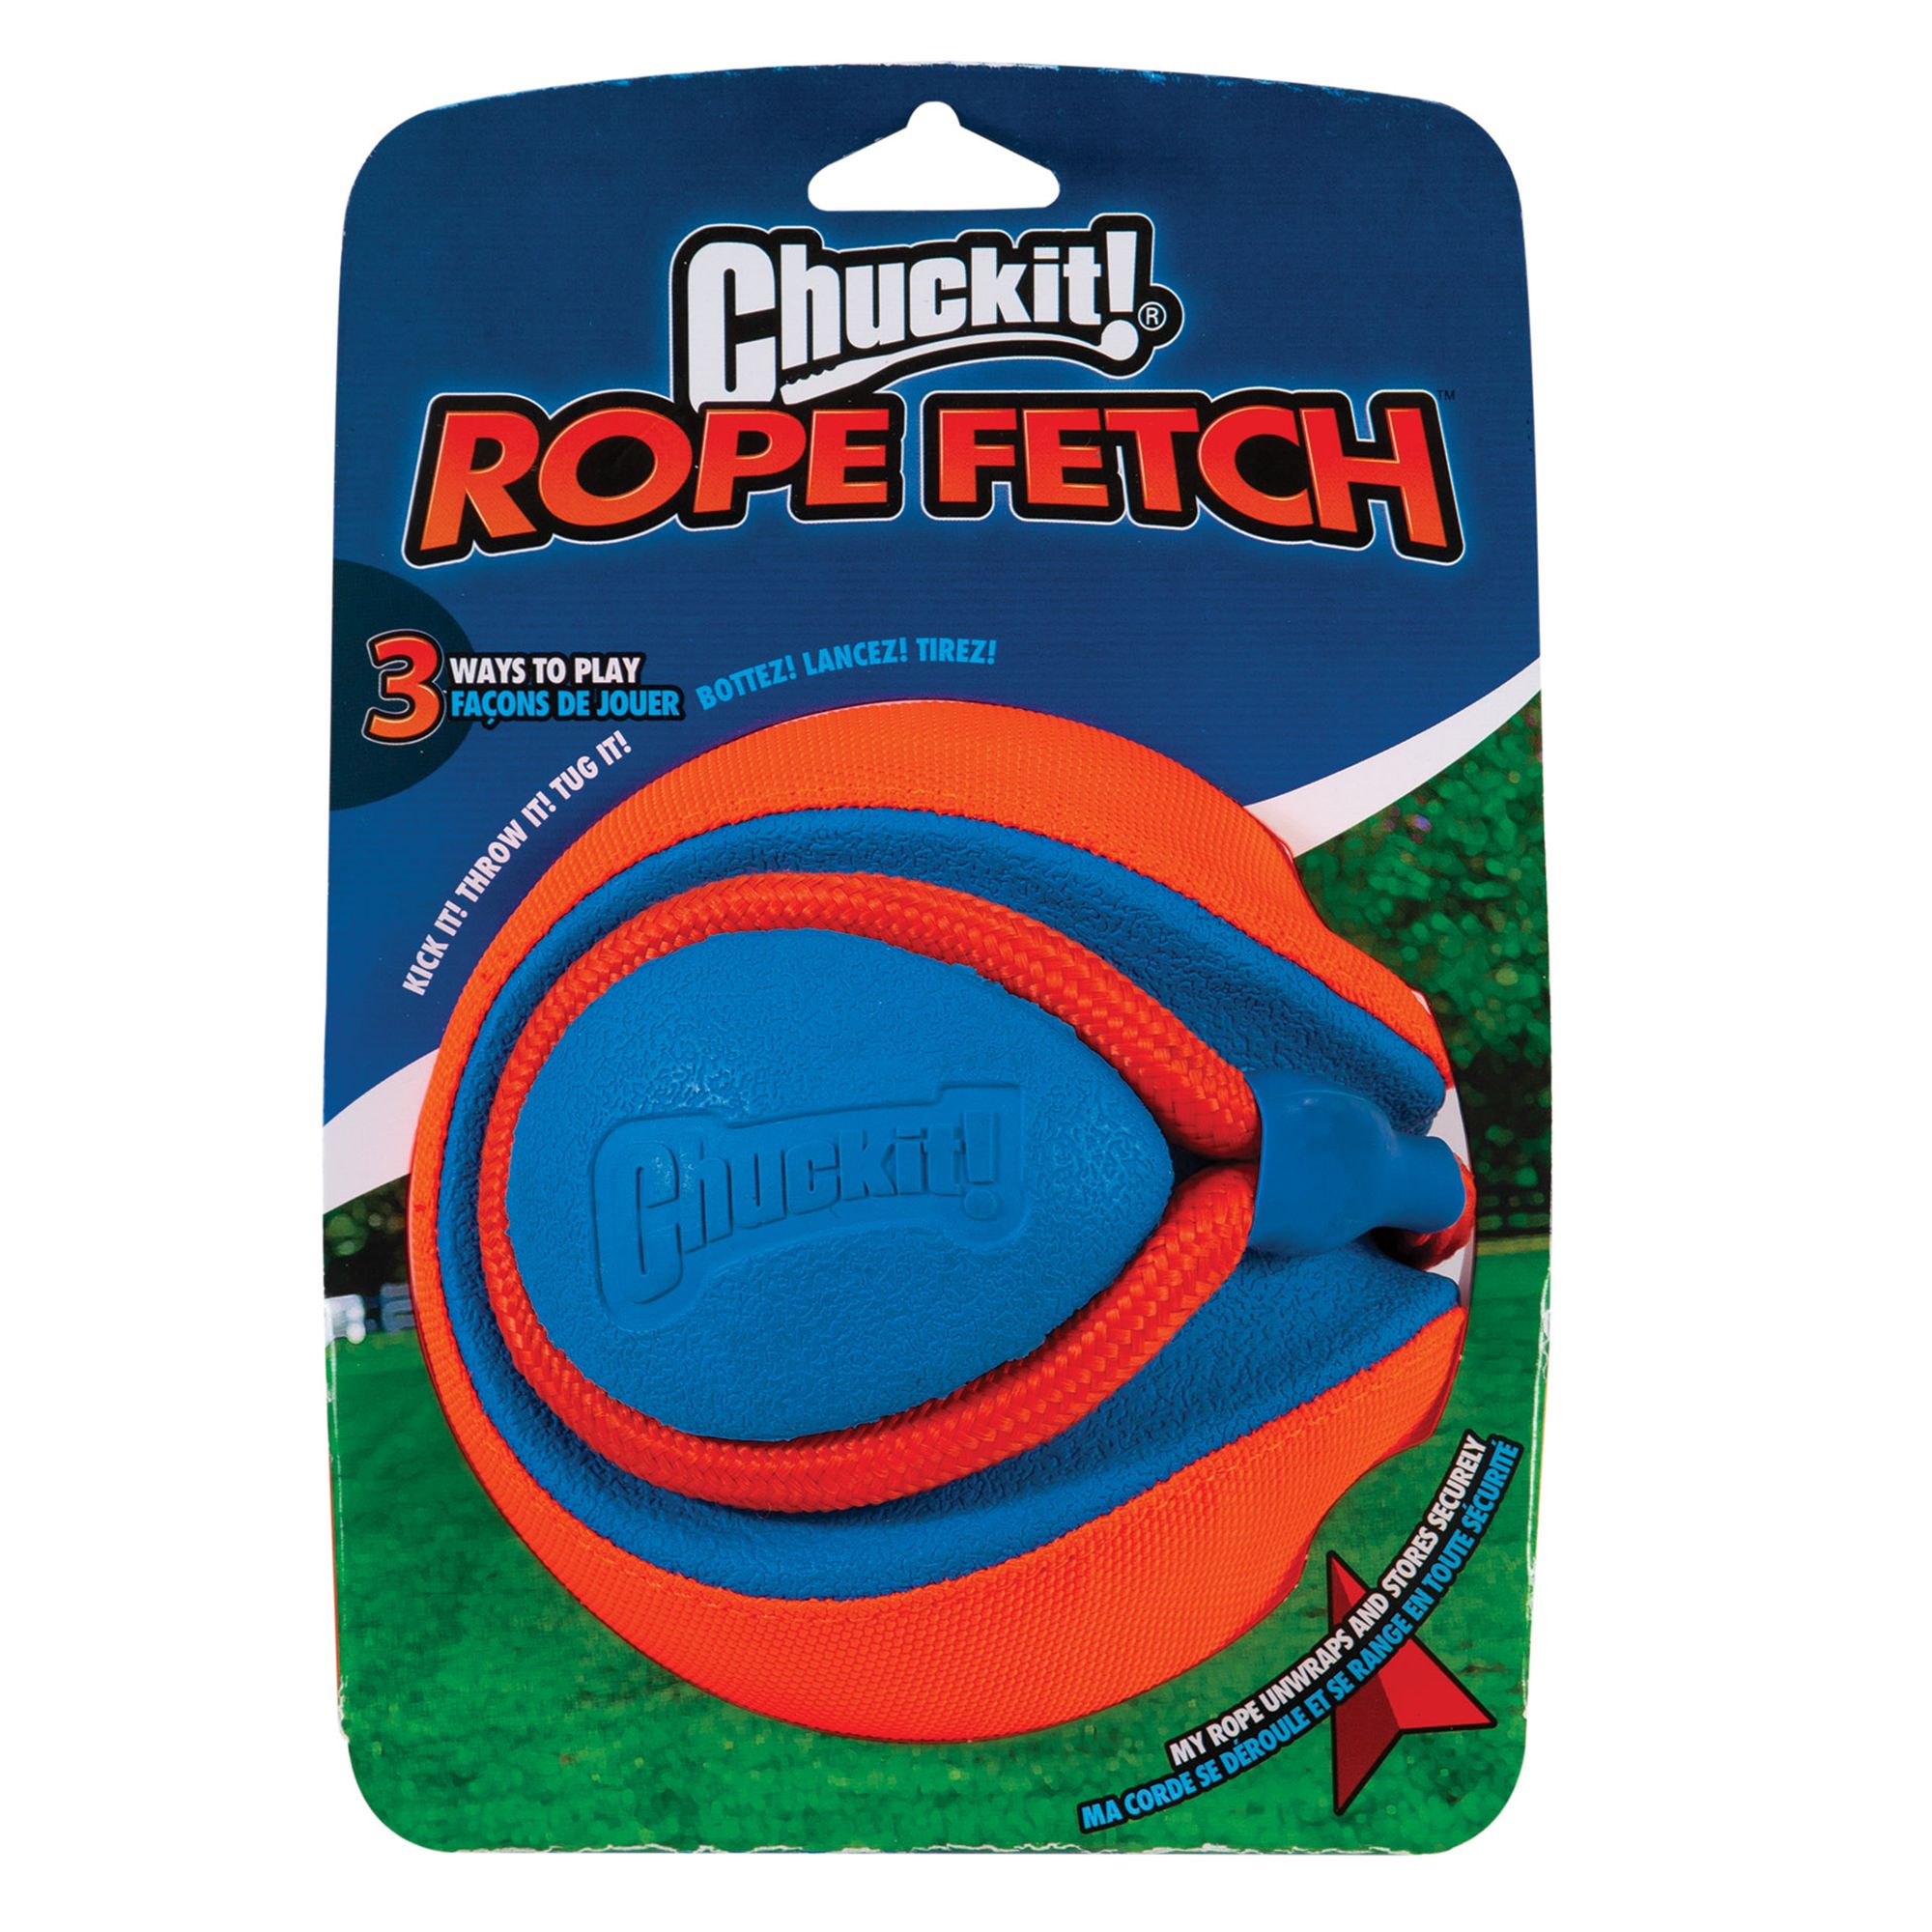 Chuckit!® Rope Fetch Dog Toy | dog 